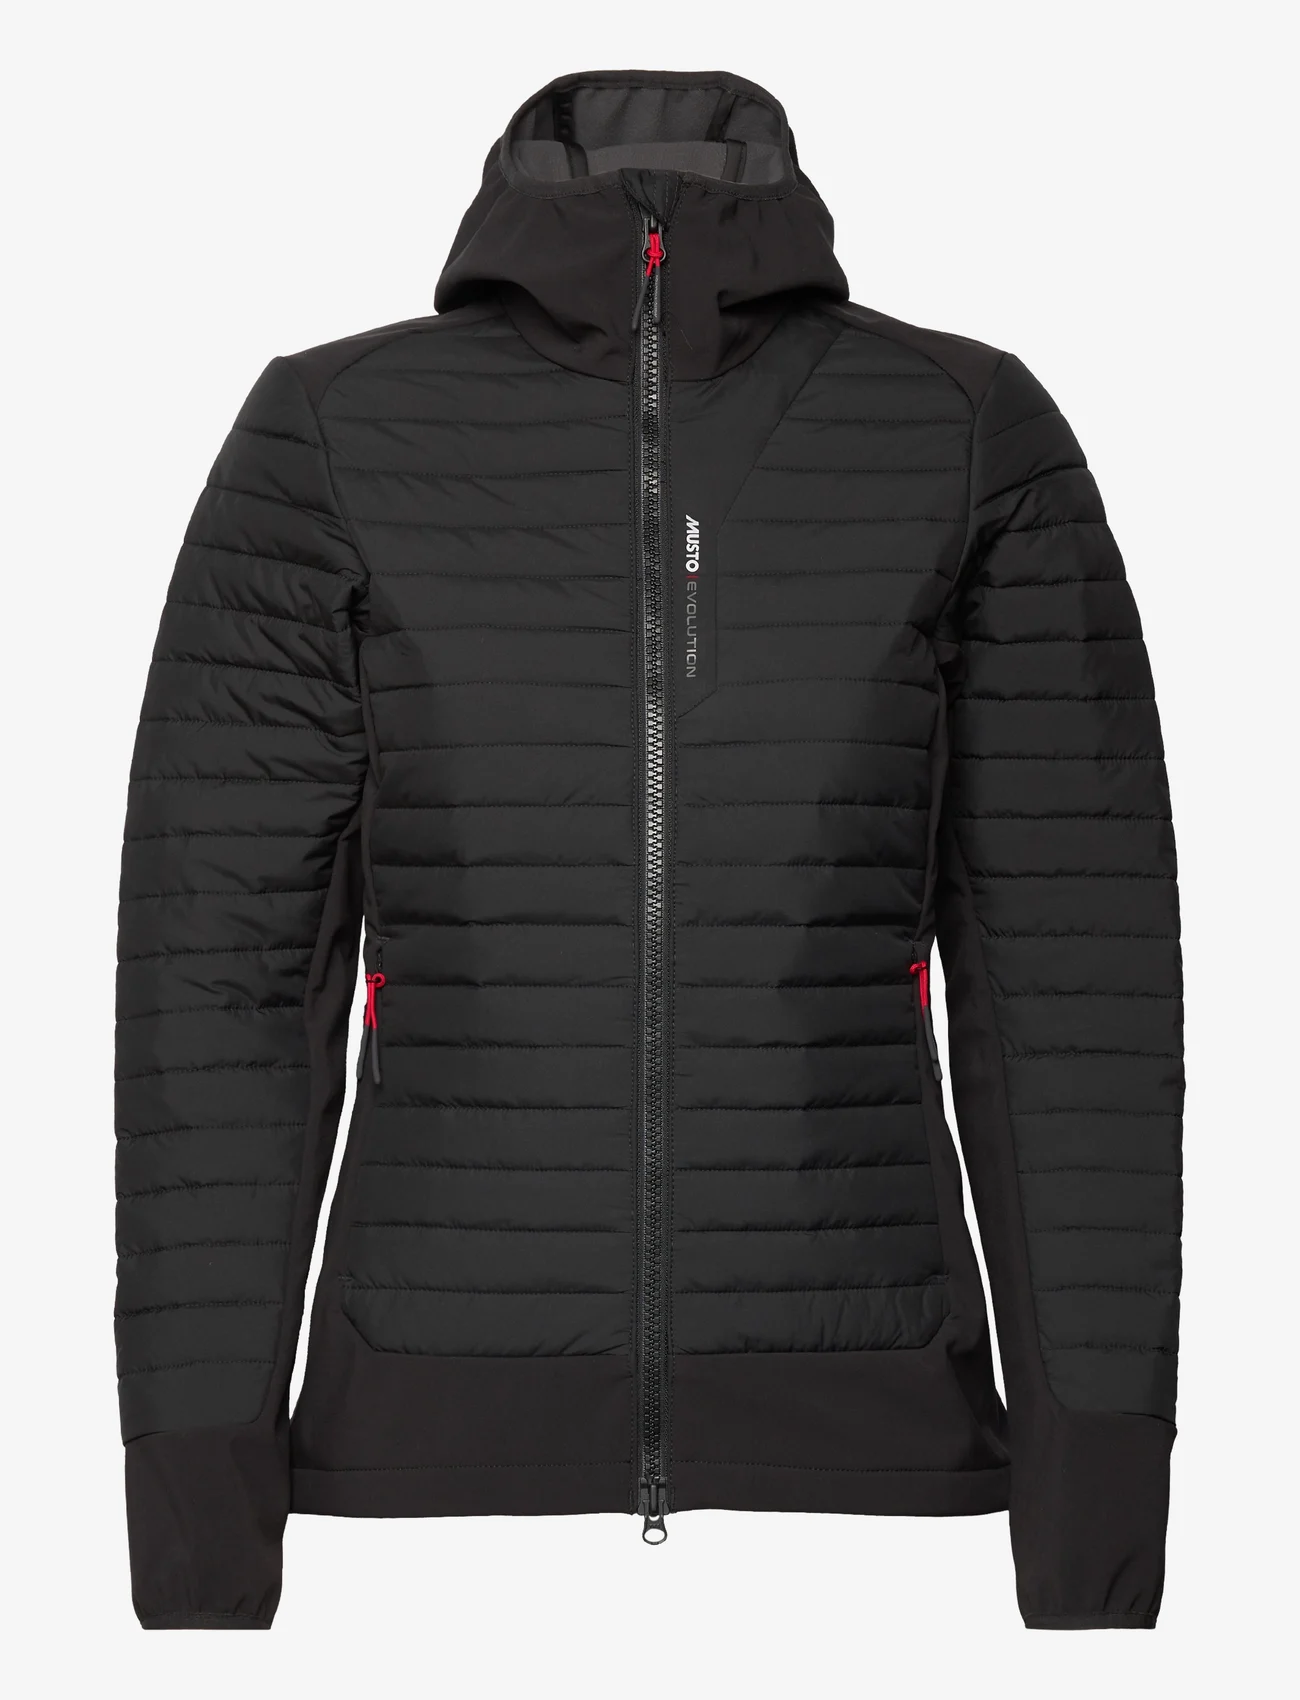 Musto - W EVO LOFT HOODED JKT - outdoor & rain jackets - black - 0